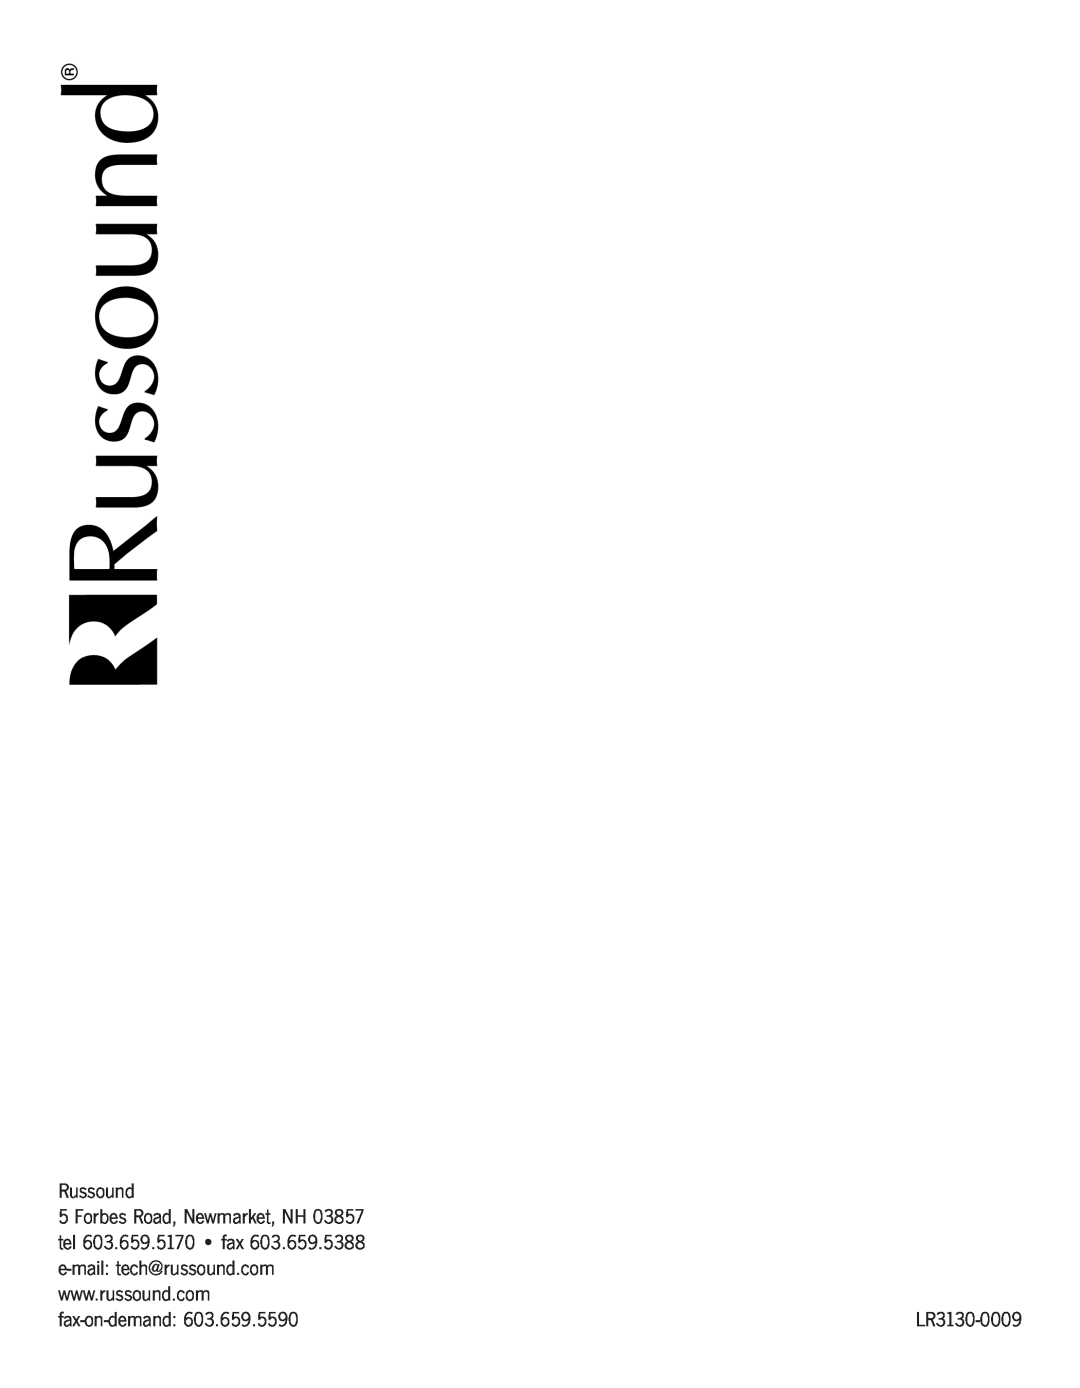 Russound Advantage Series Russound, Forbes Road, Newmarket, NH, tel 603.659.5170 fax, fax-on-demand, LR3130-0009 